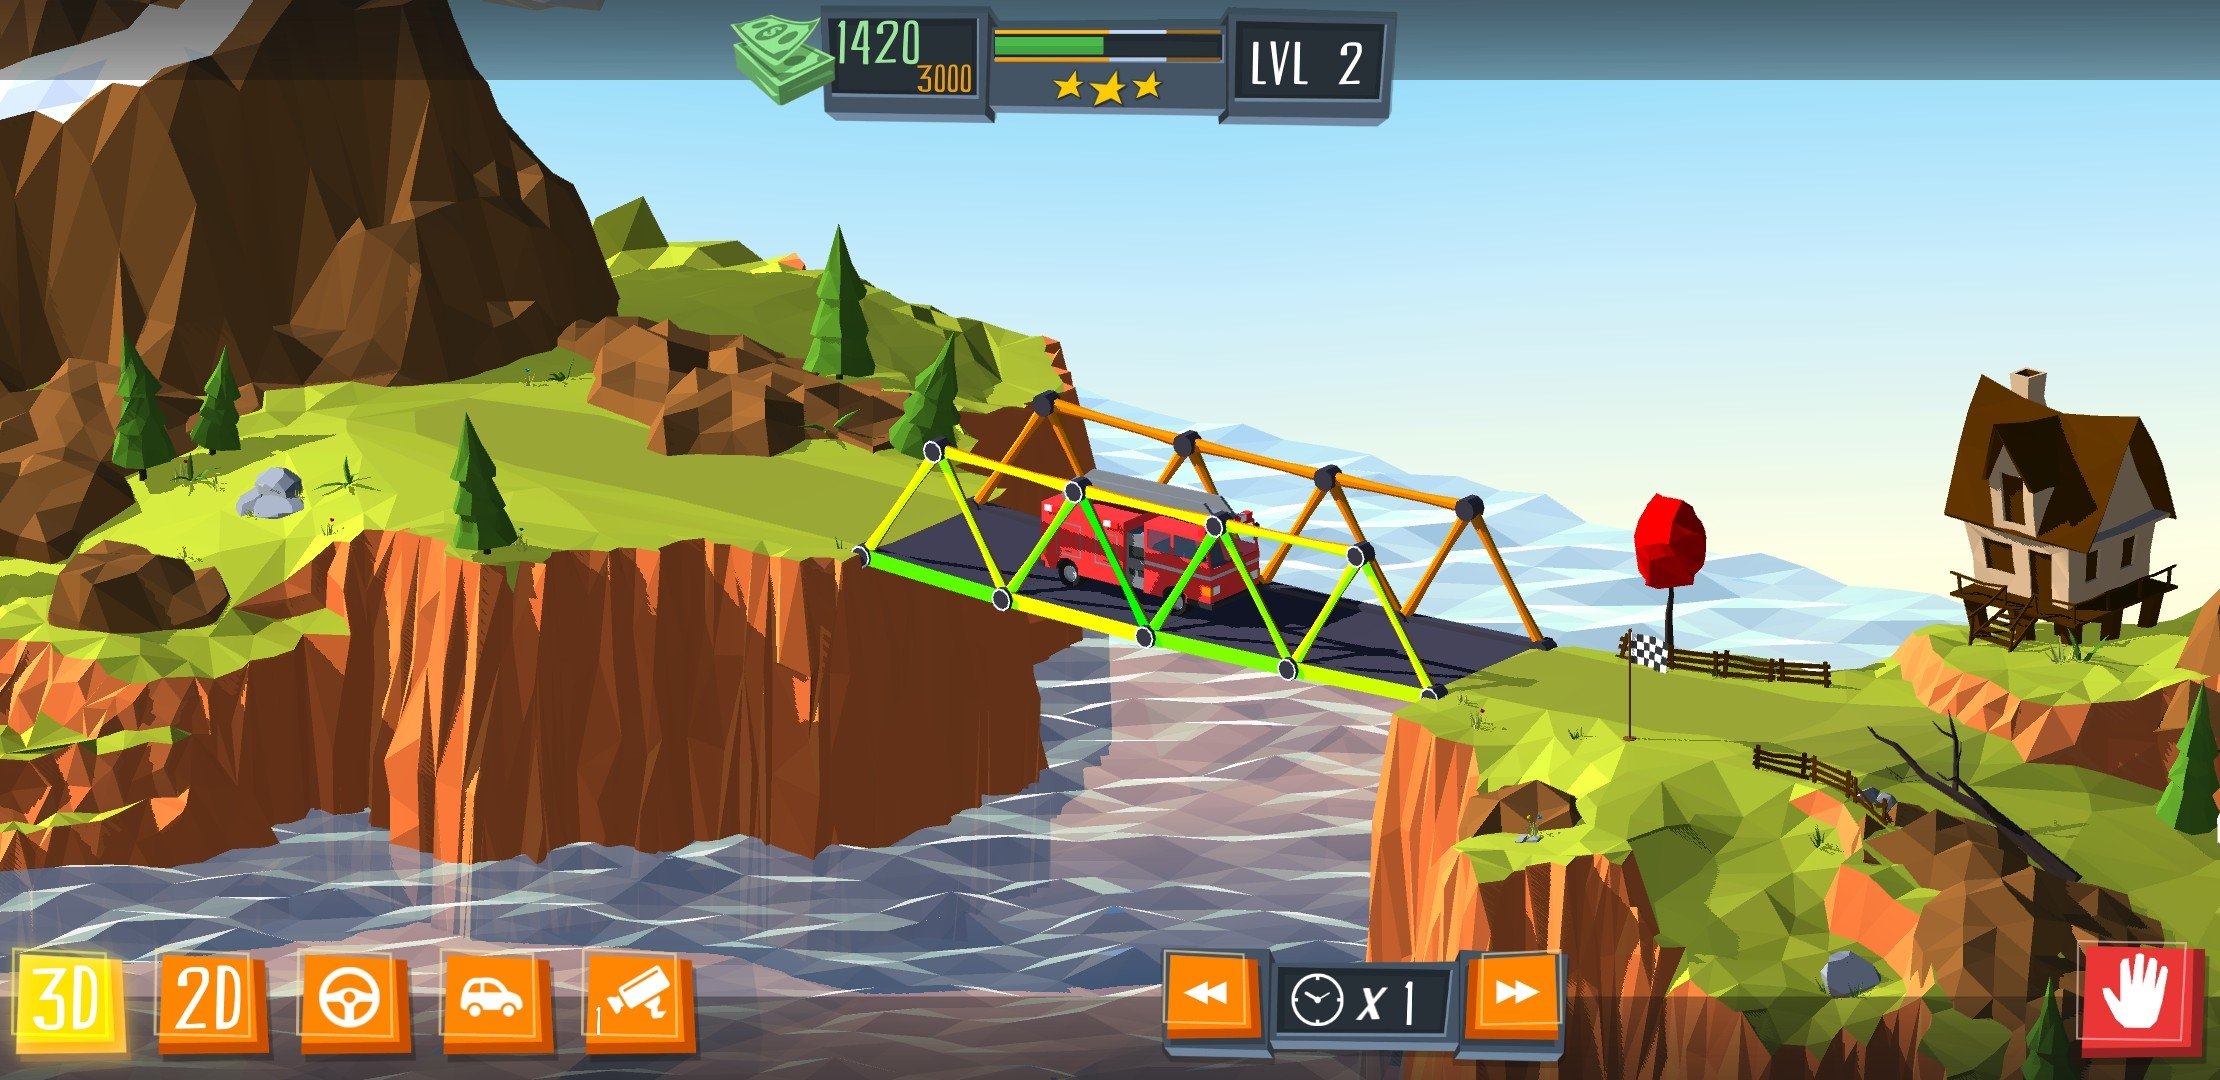 Construct A Bridge Game: Free Online Bridge Building Video Game for Kids